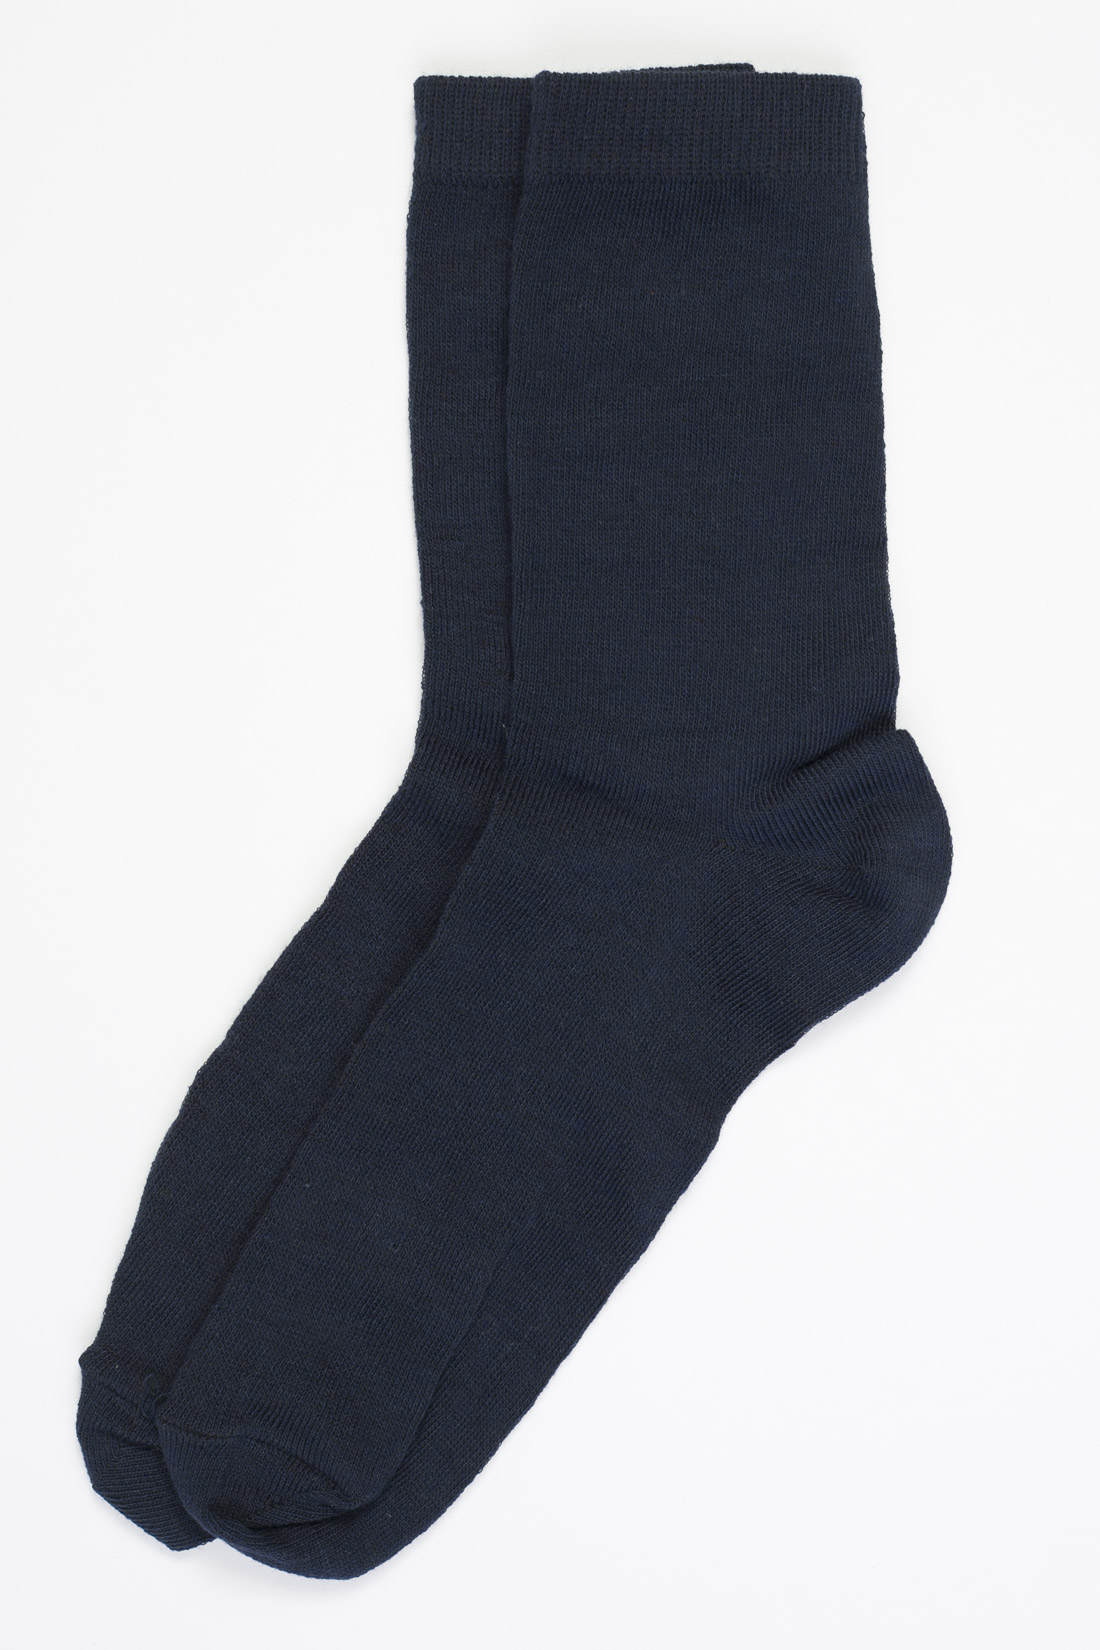 Однотонные носки (арт. baon B397020), размер 35/37, цвет синий